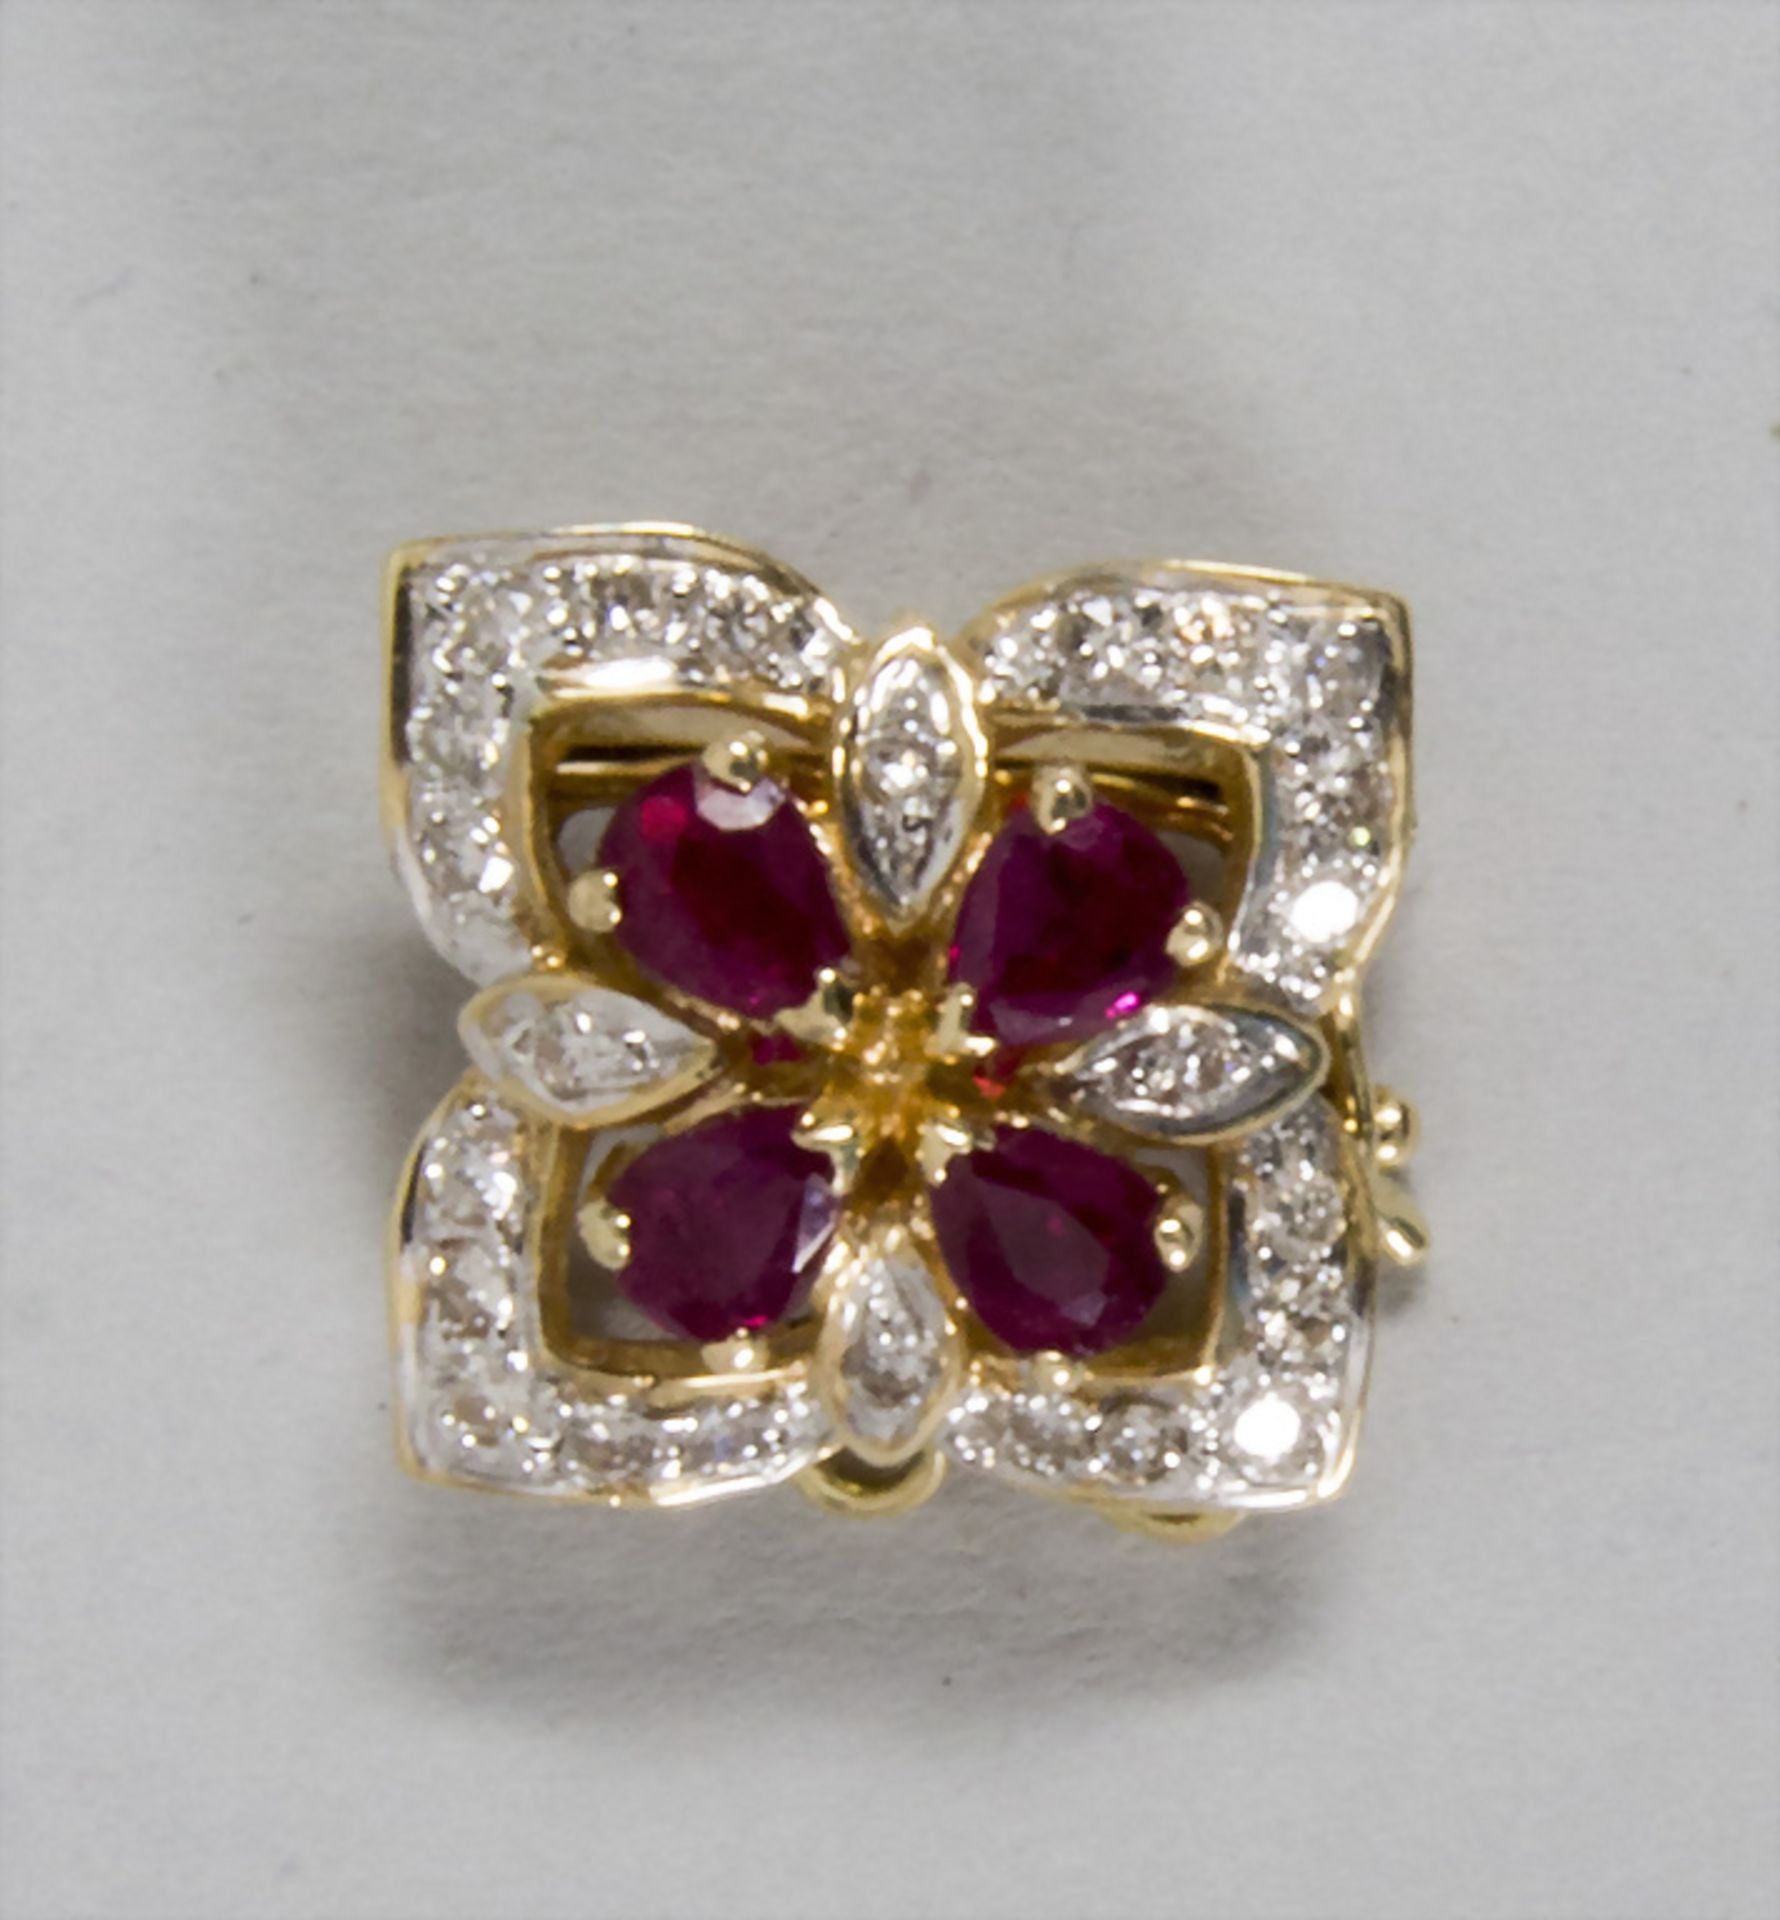 Kettenverschluss/Anhänger / An 14ct gold chain clasp/pendant with rubies and diamonds, 20. Jh.